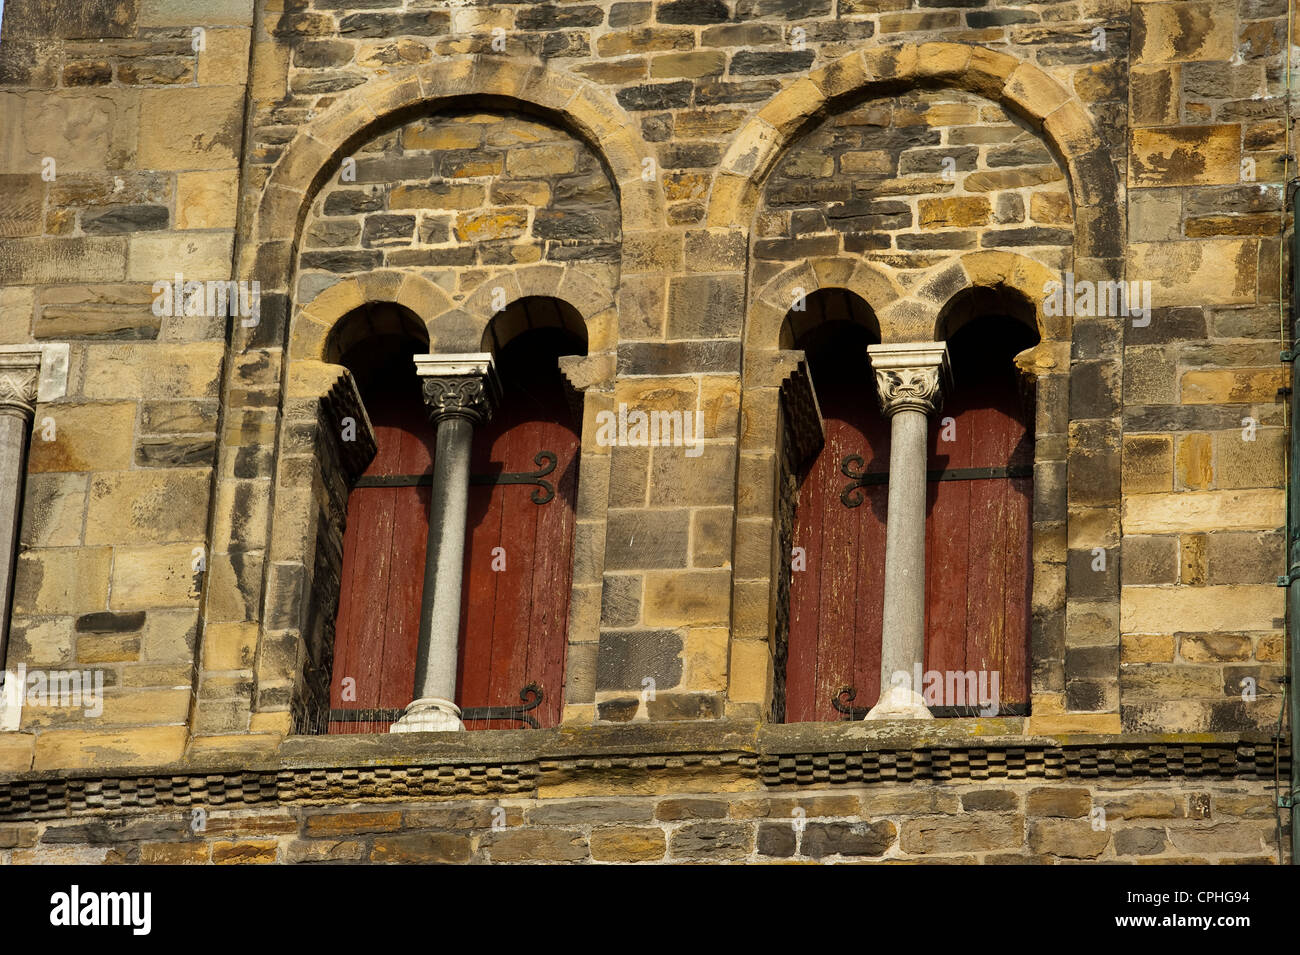 Window detail, 'Onze Lieve Vrouwebasiliek' basilica, Maastricht, Limburg, The Netherlands, Europe. Stock Photo